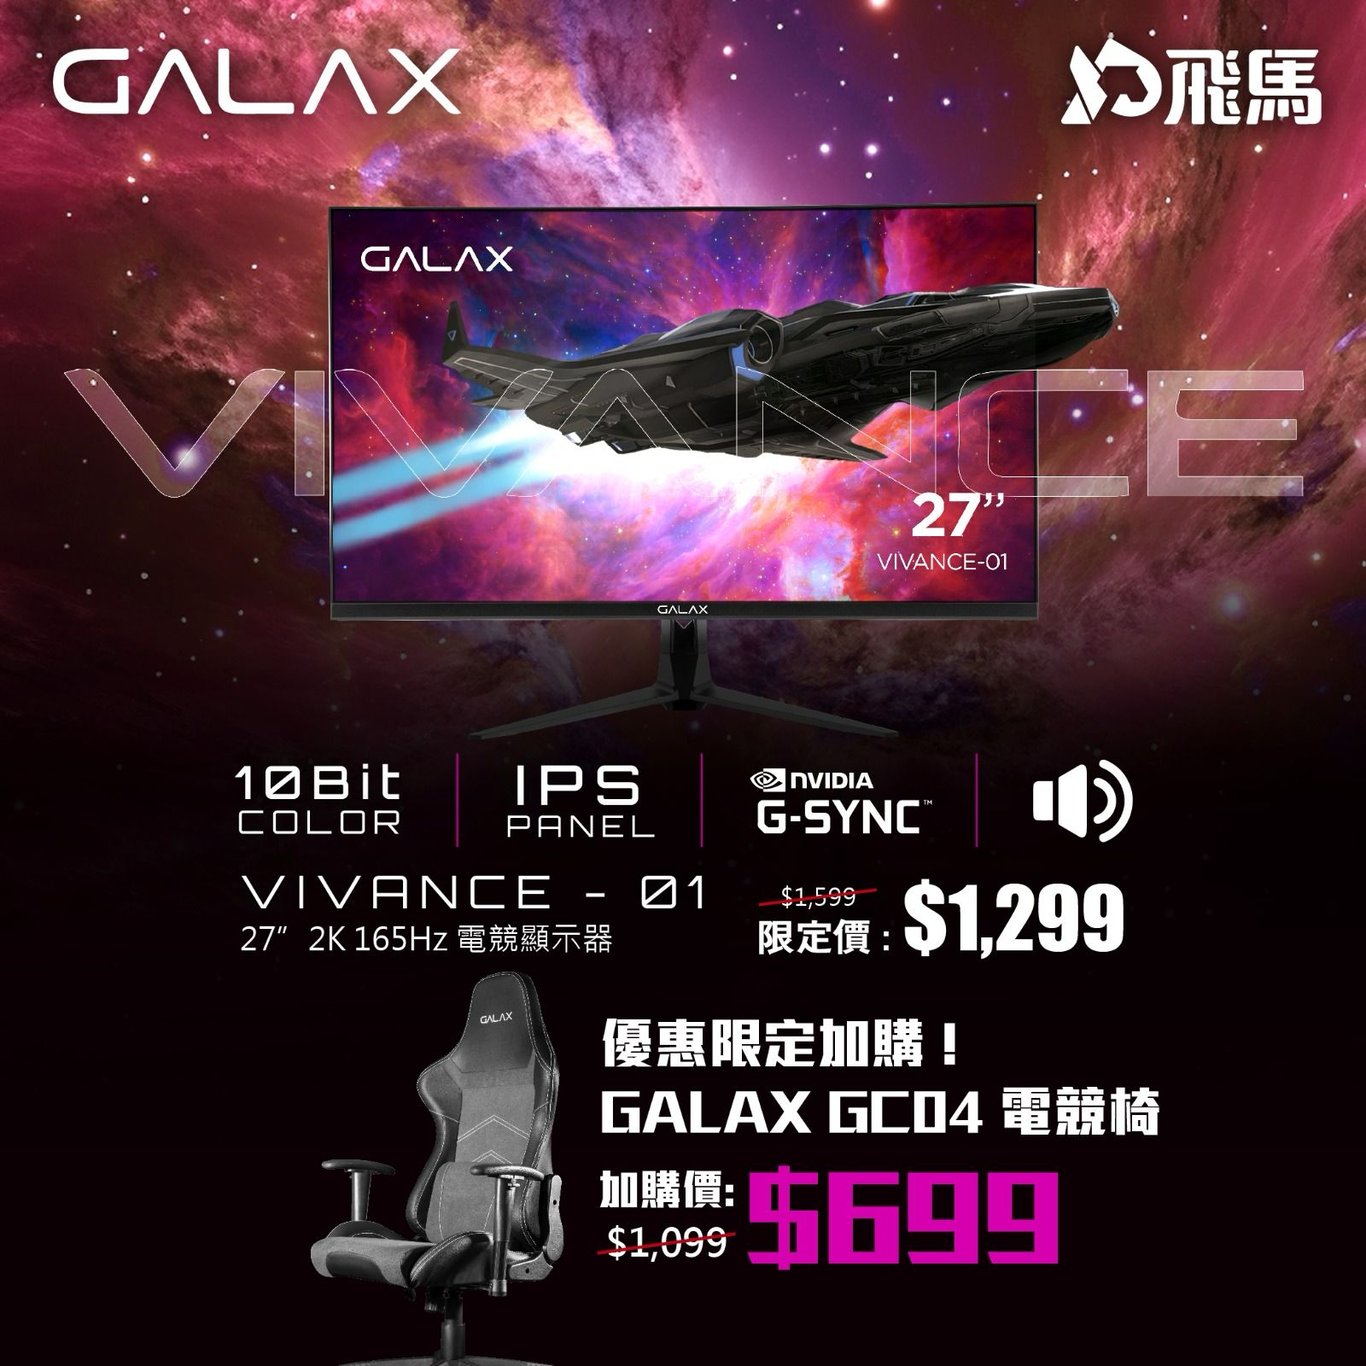 Galax Vivance 01 電競顯示器 + GALAX Gaming Chair Series GC-04 電競椅 - Black 黑色